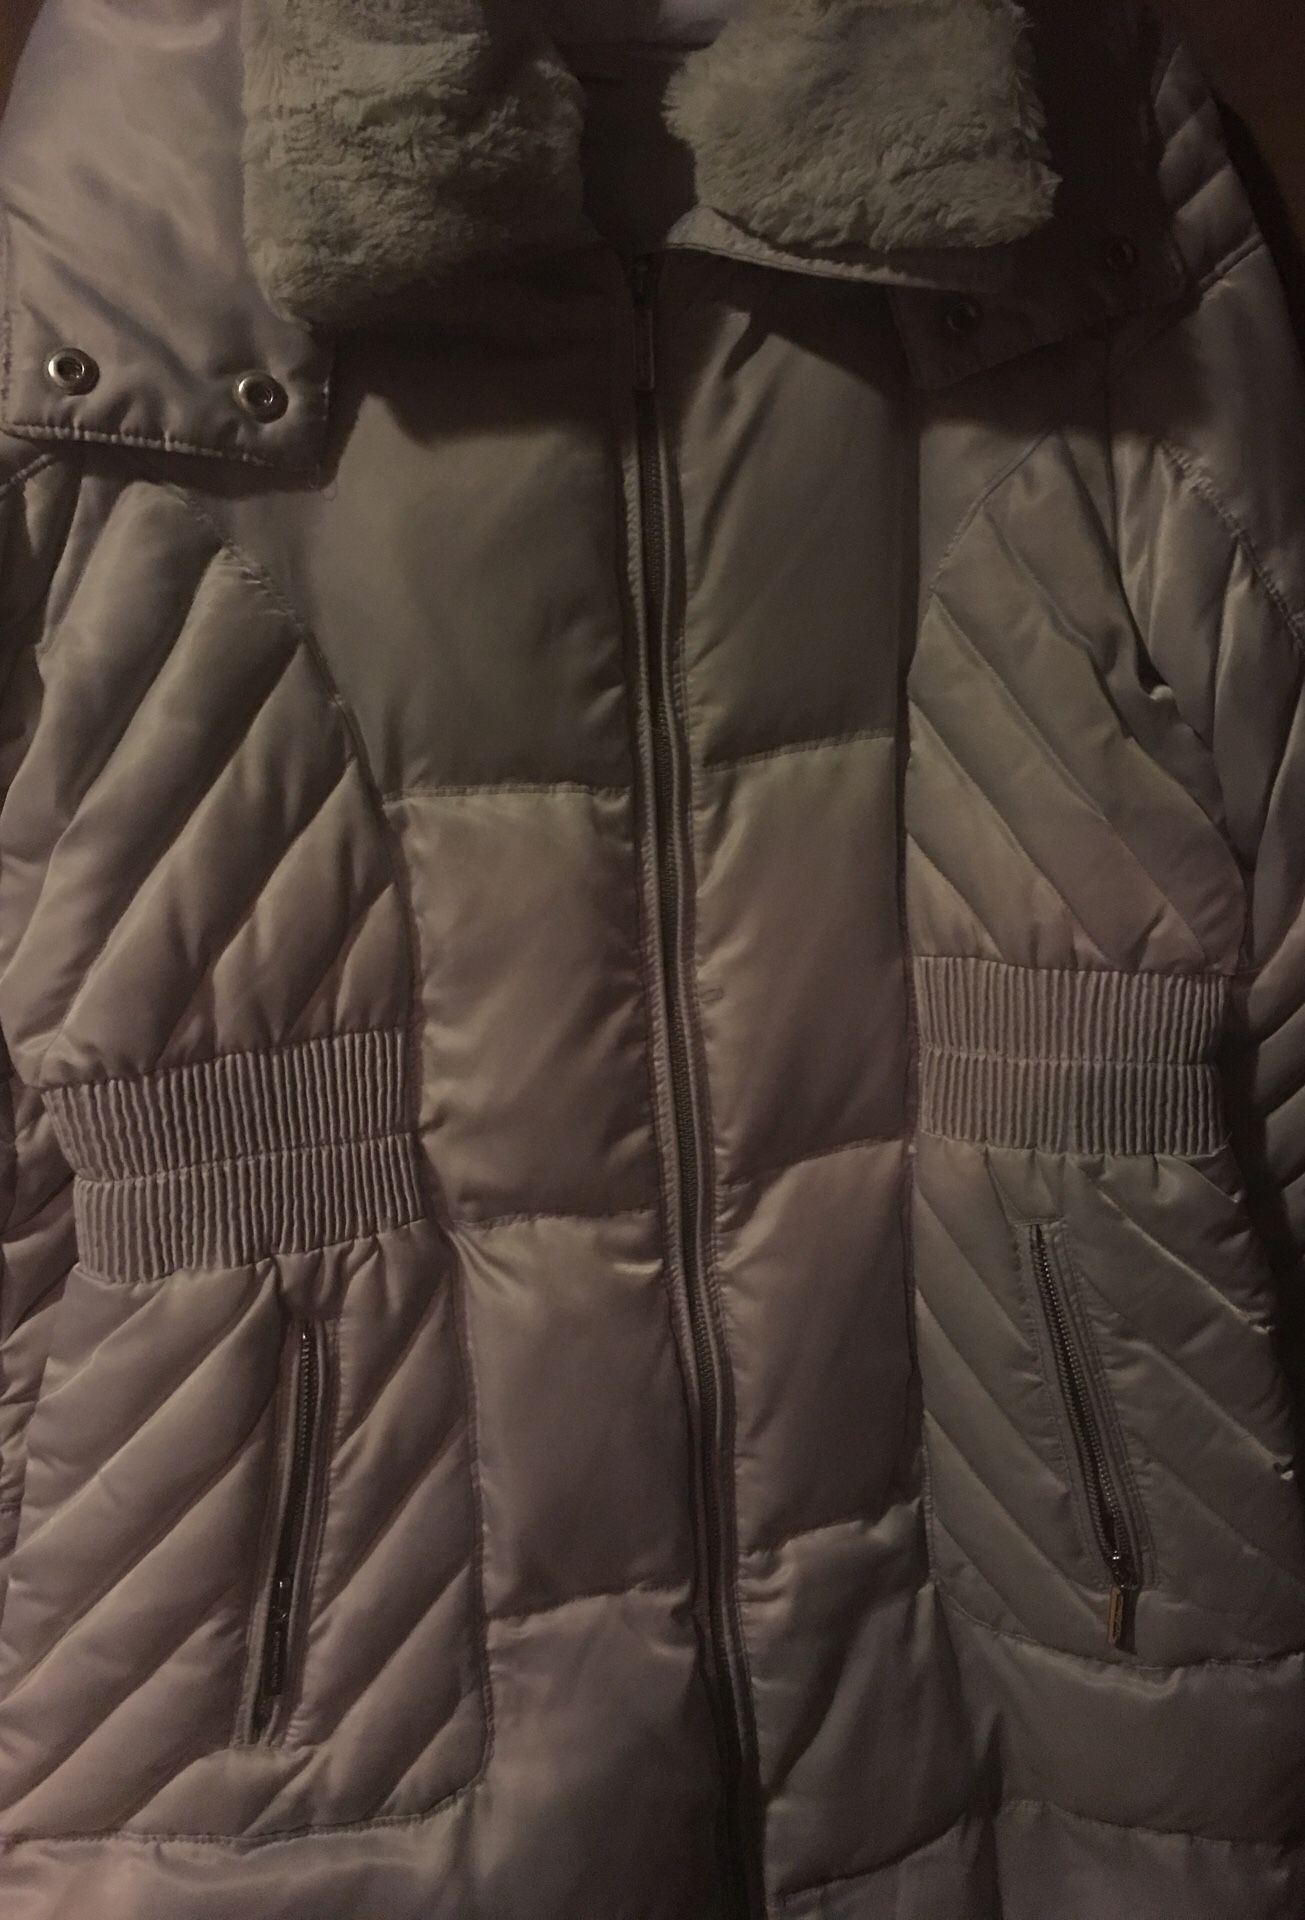 Brand new Michael kors winter coat